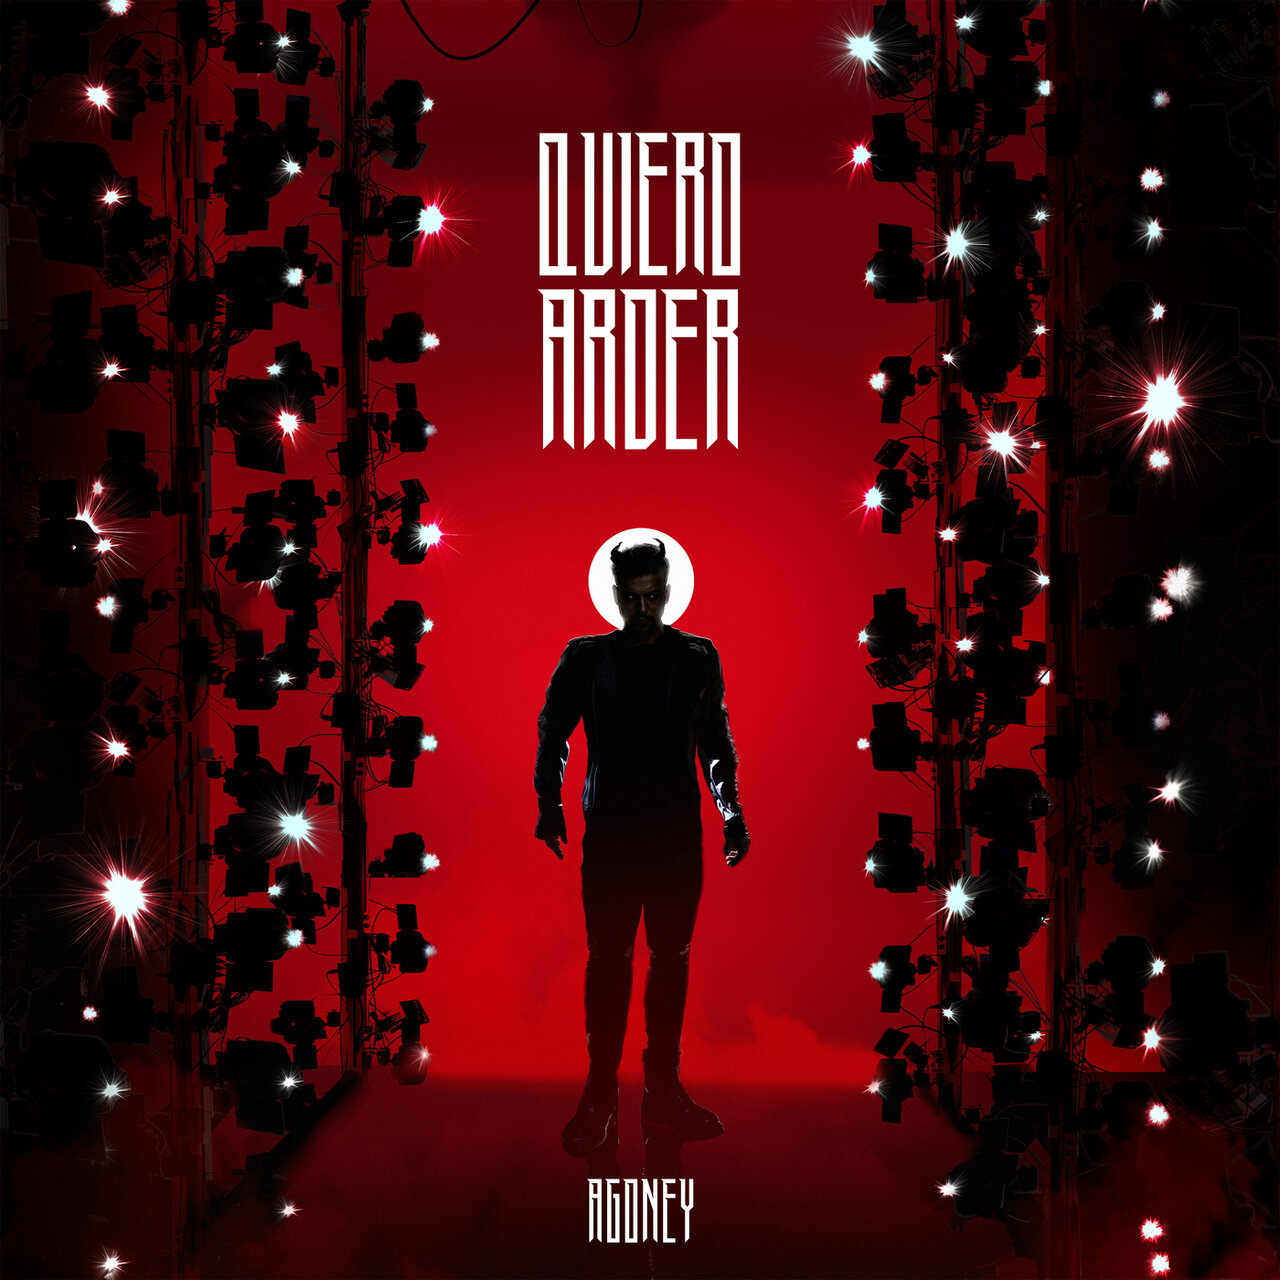 Agoney Quiero Arder cover artwork